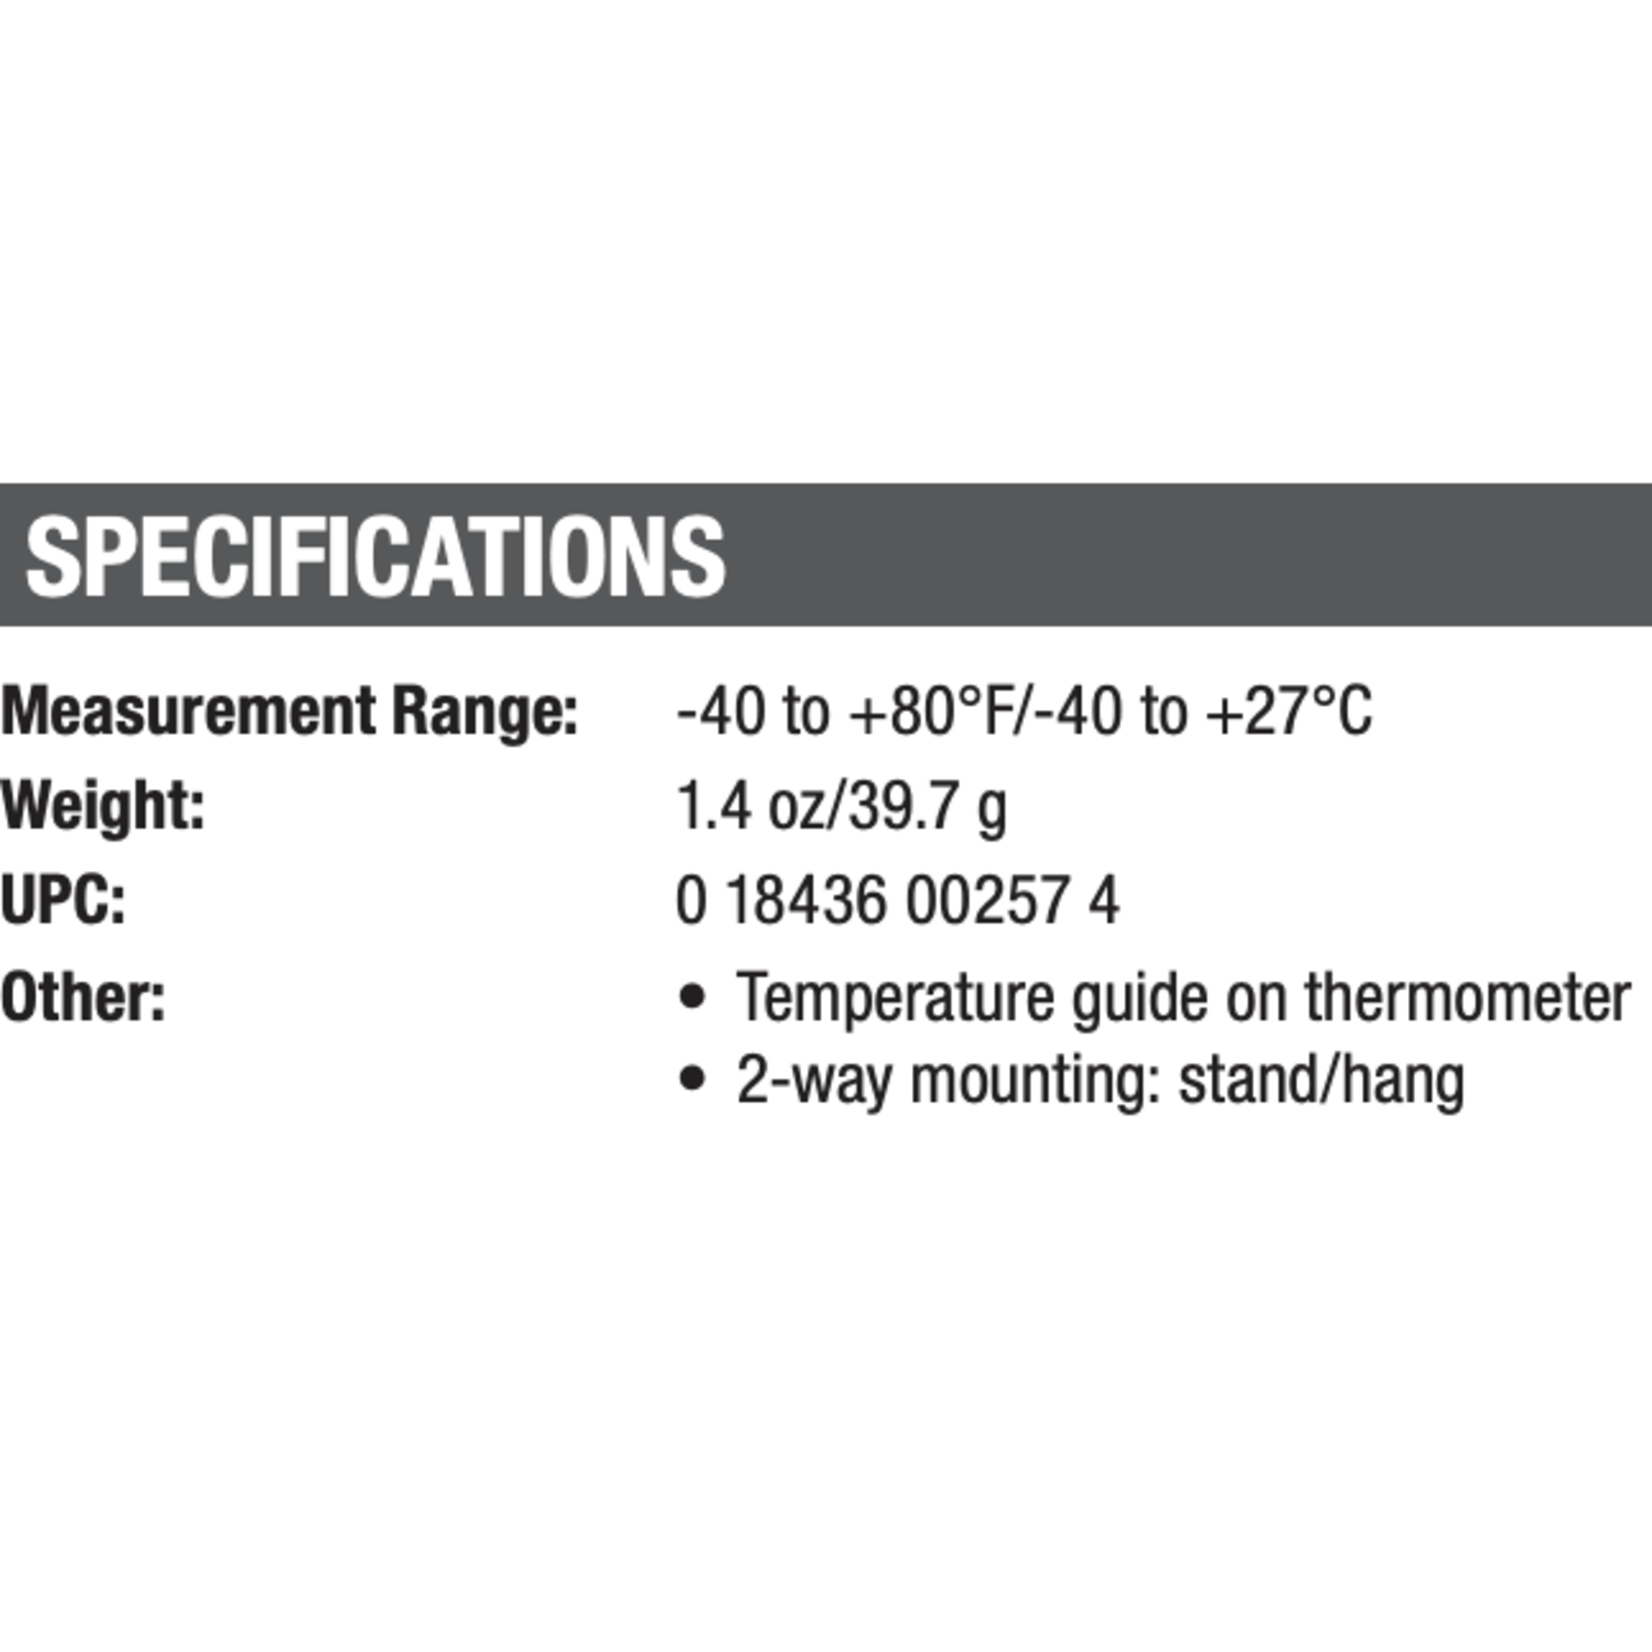 CDN CDN ProAccurate Refrigerator / Freezer Thermometer